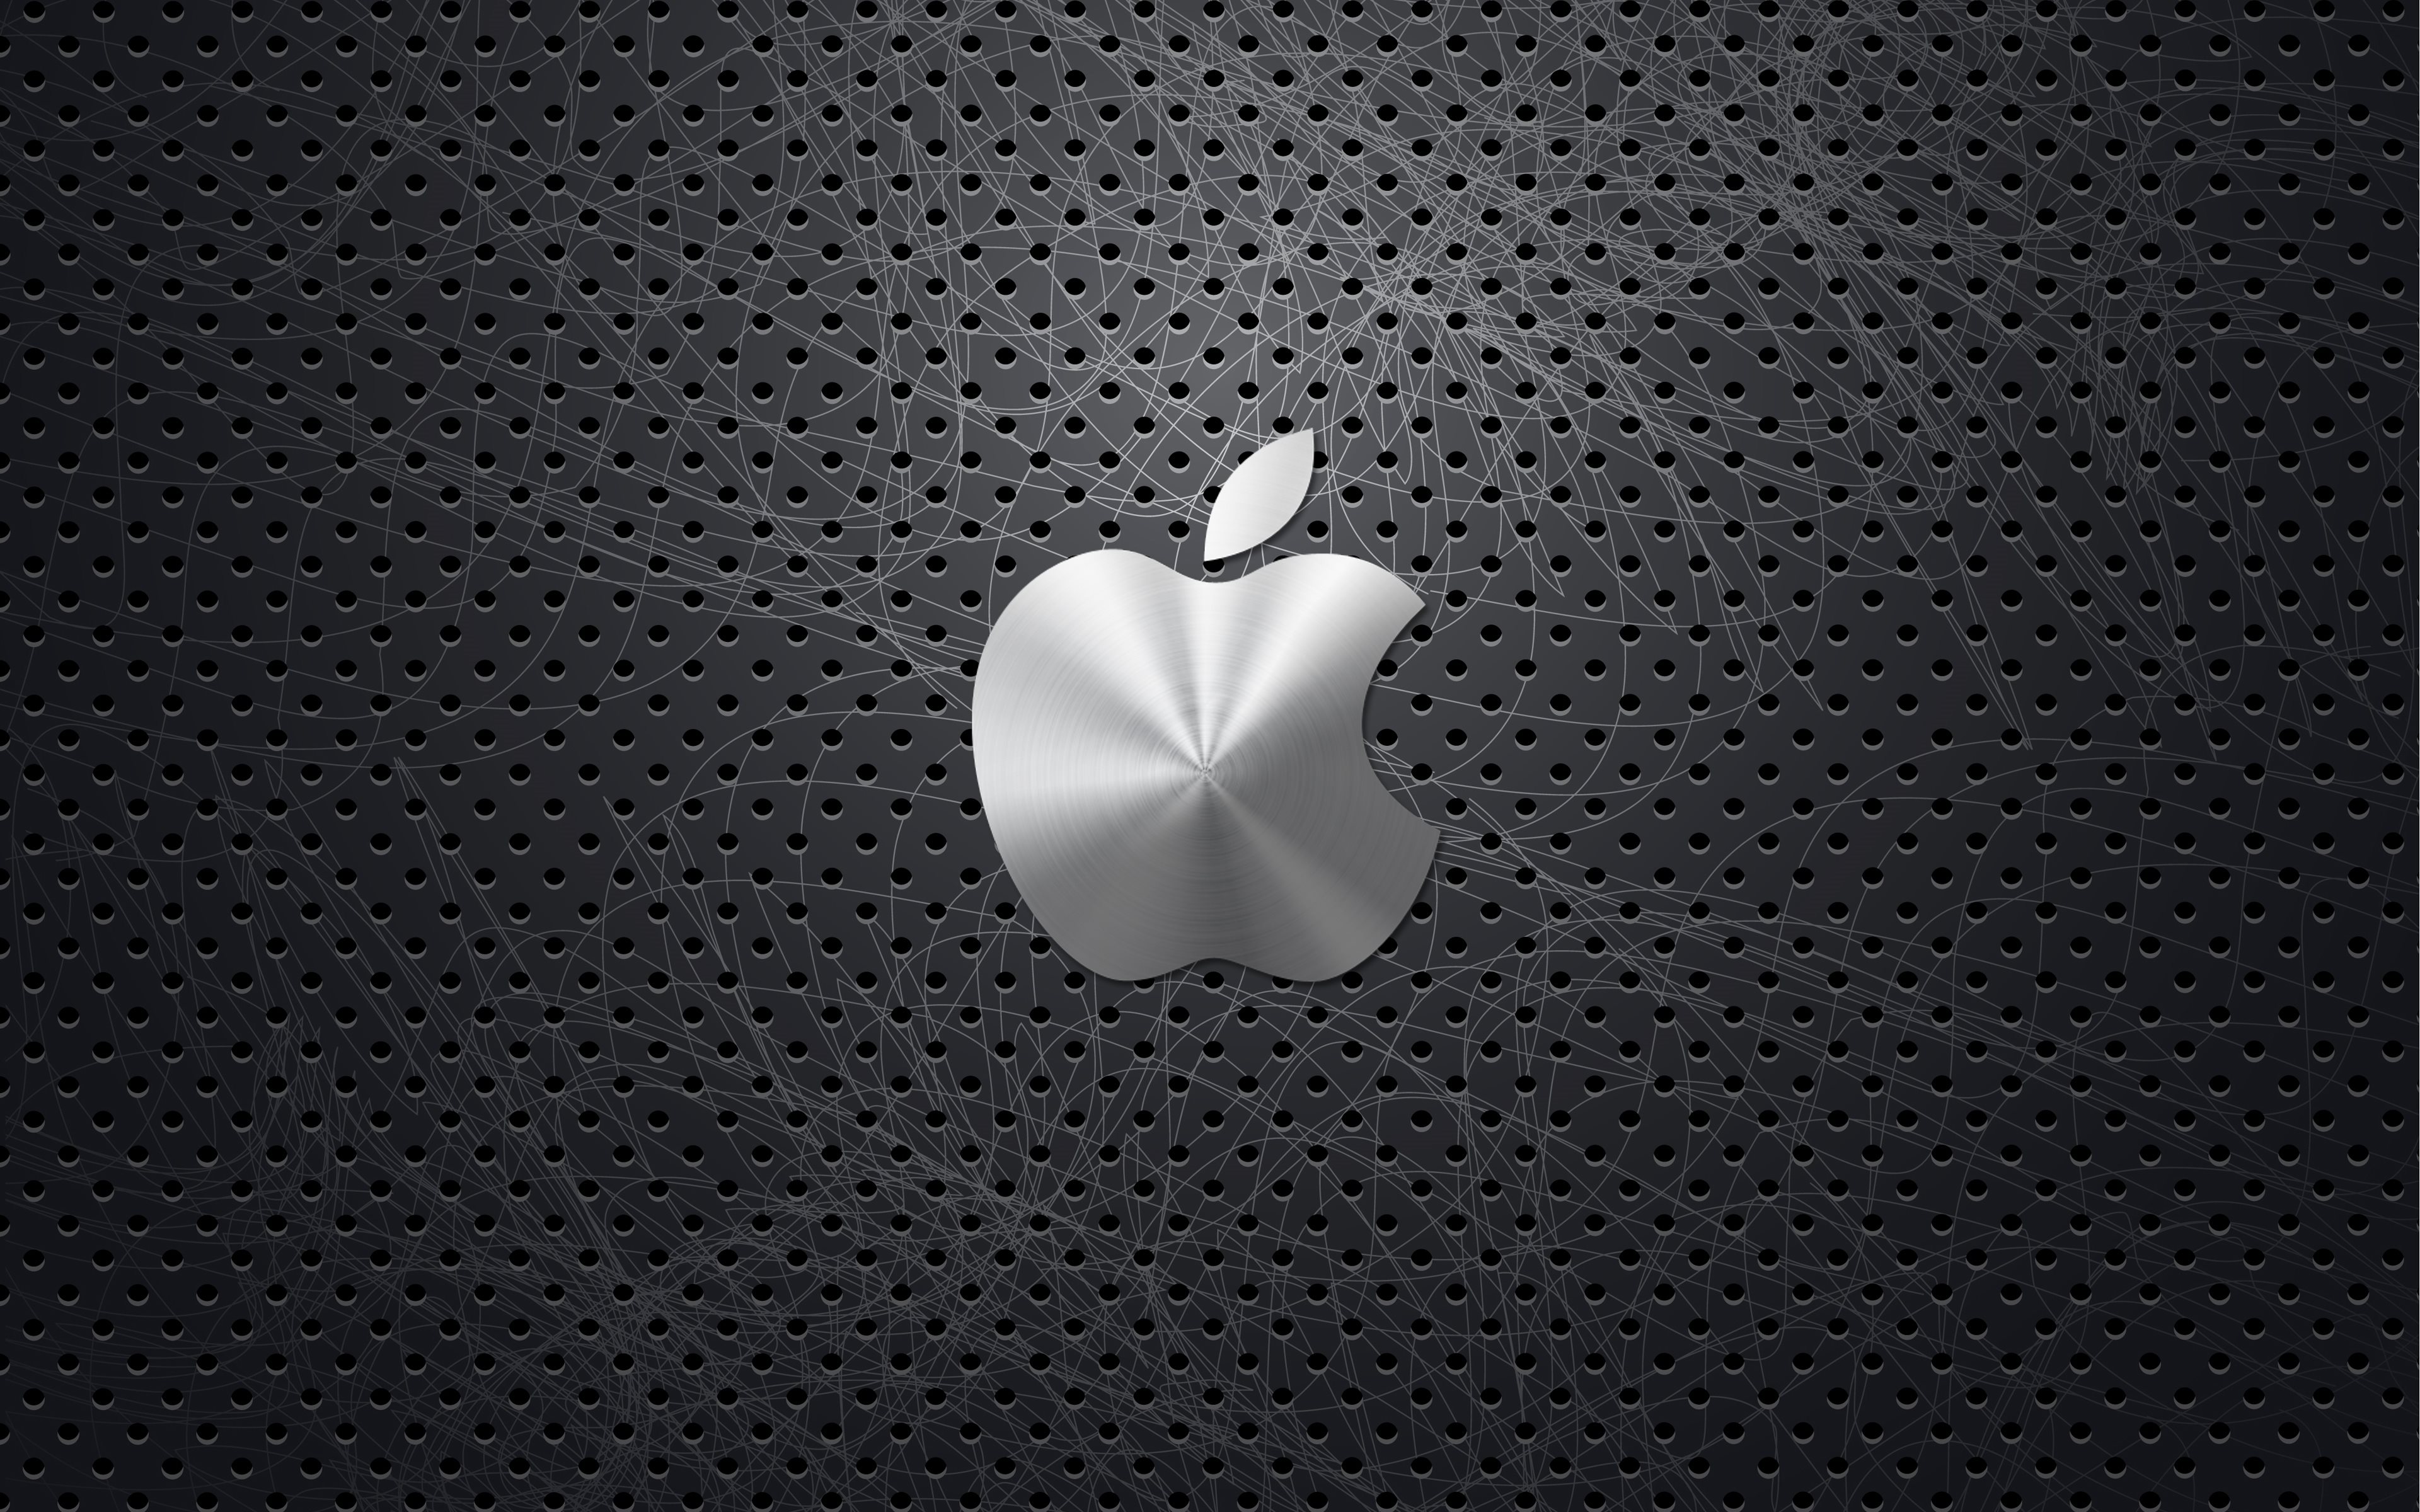 Download wallpapers 4k, Apple logo, metal grid, art, Apple, creative ...